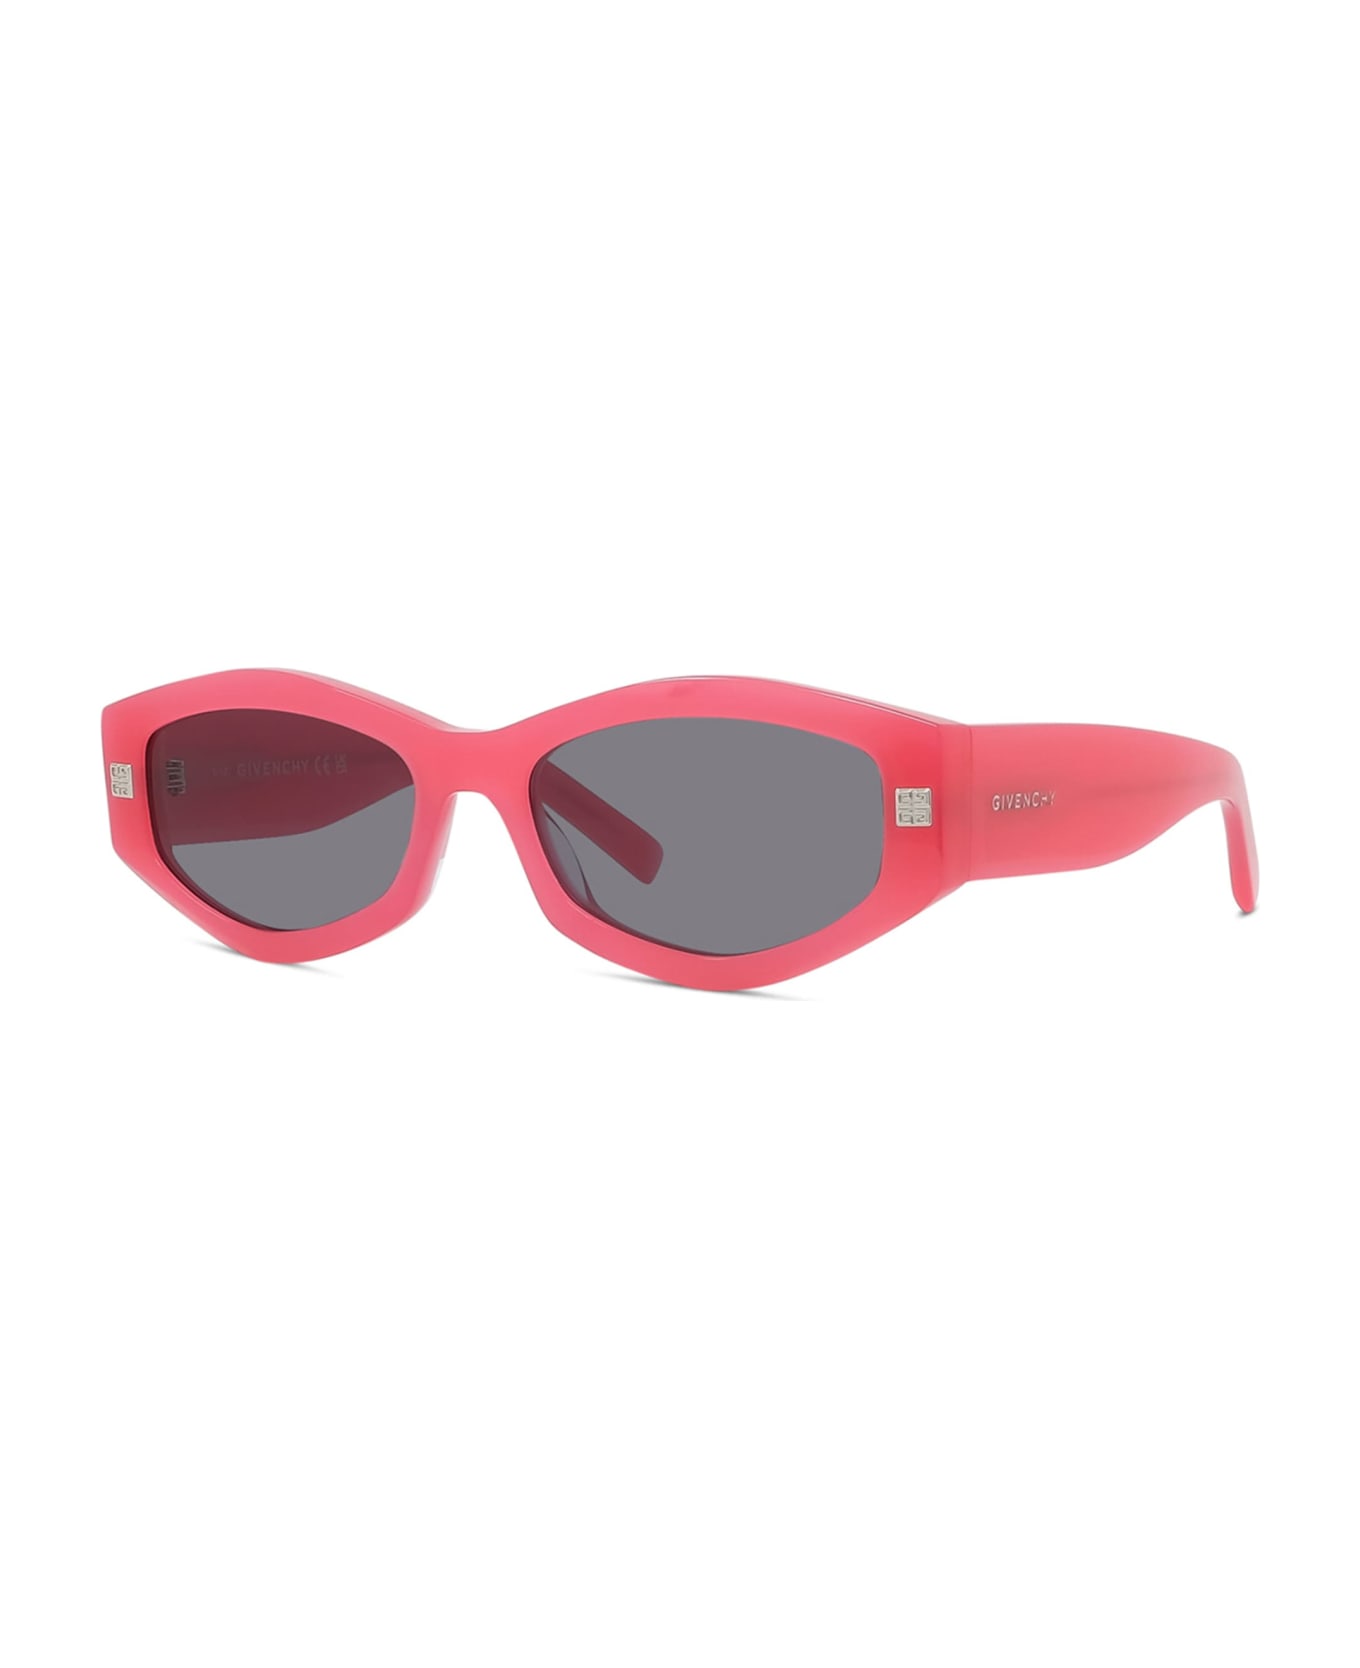 Givenchy Eyewear Gv40062i - Shiny Fuchsia Sunglasses - pink